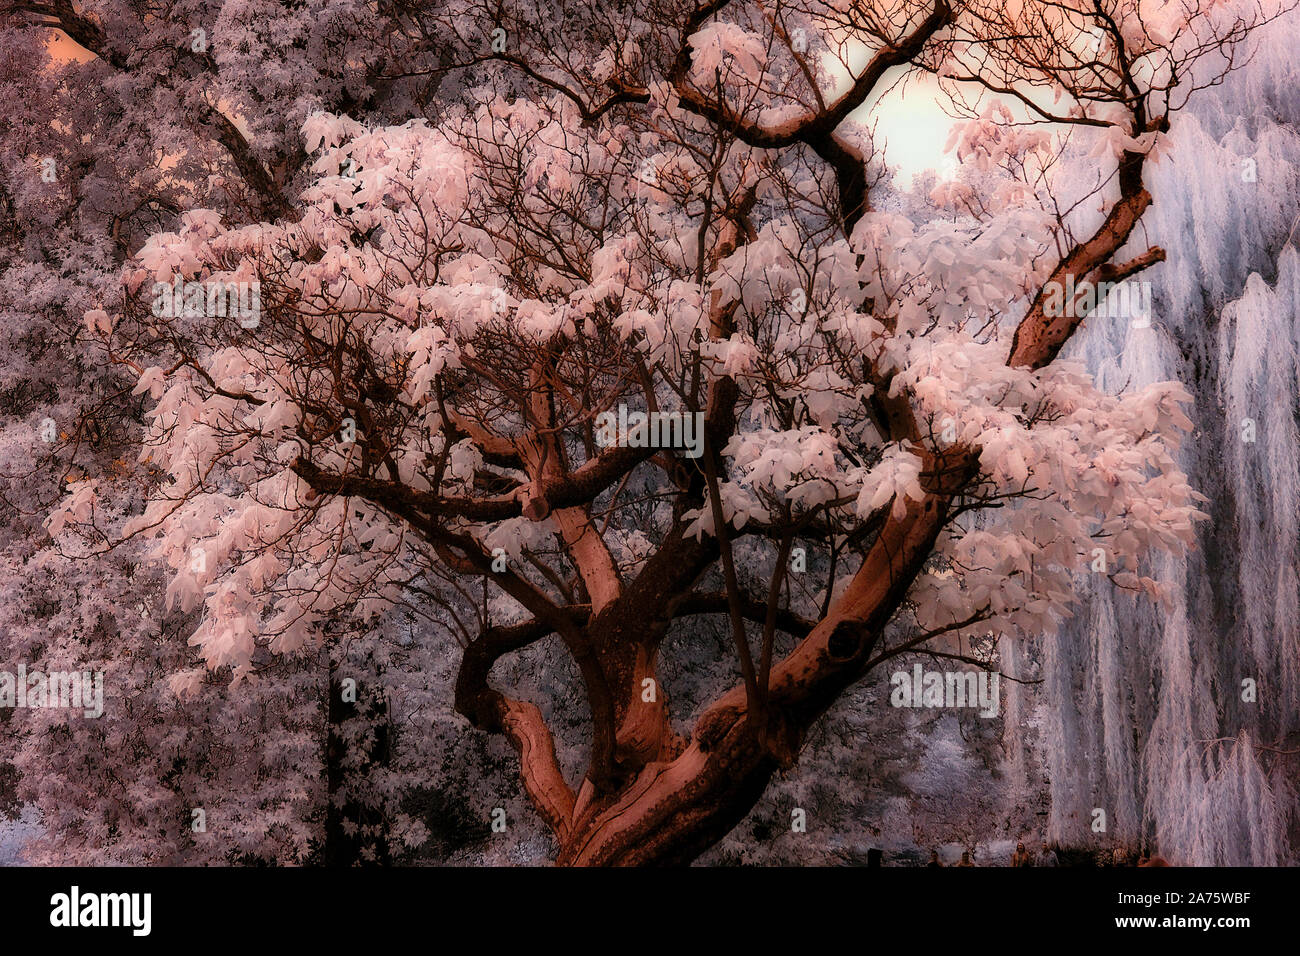 infrared image - illusion of wintertime - trees - regent's park - city of london - england - uk Stock Photo